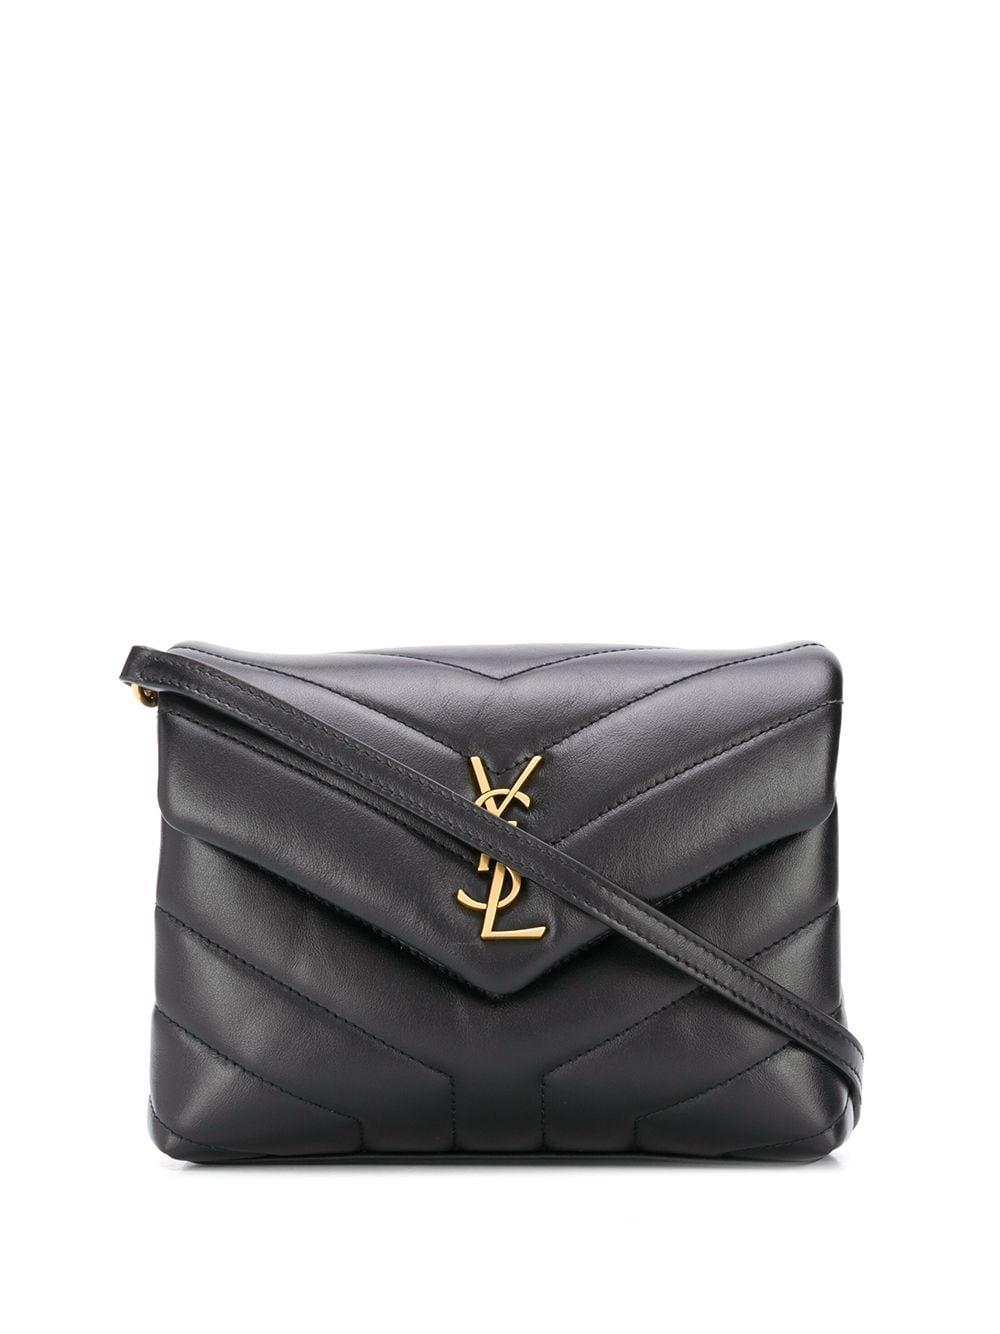 Saint Laurent Leather Toy Loulou Puffer Matelassé Mini Bag in Black - Save  38% - Lyst